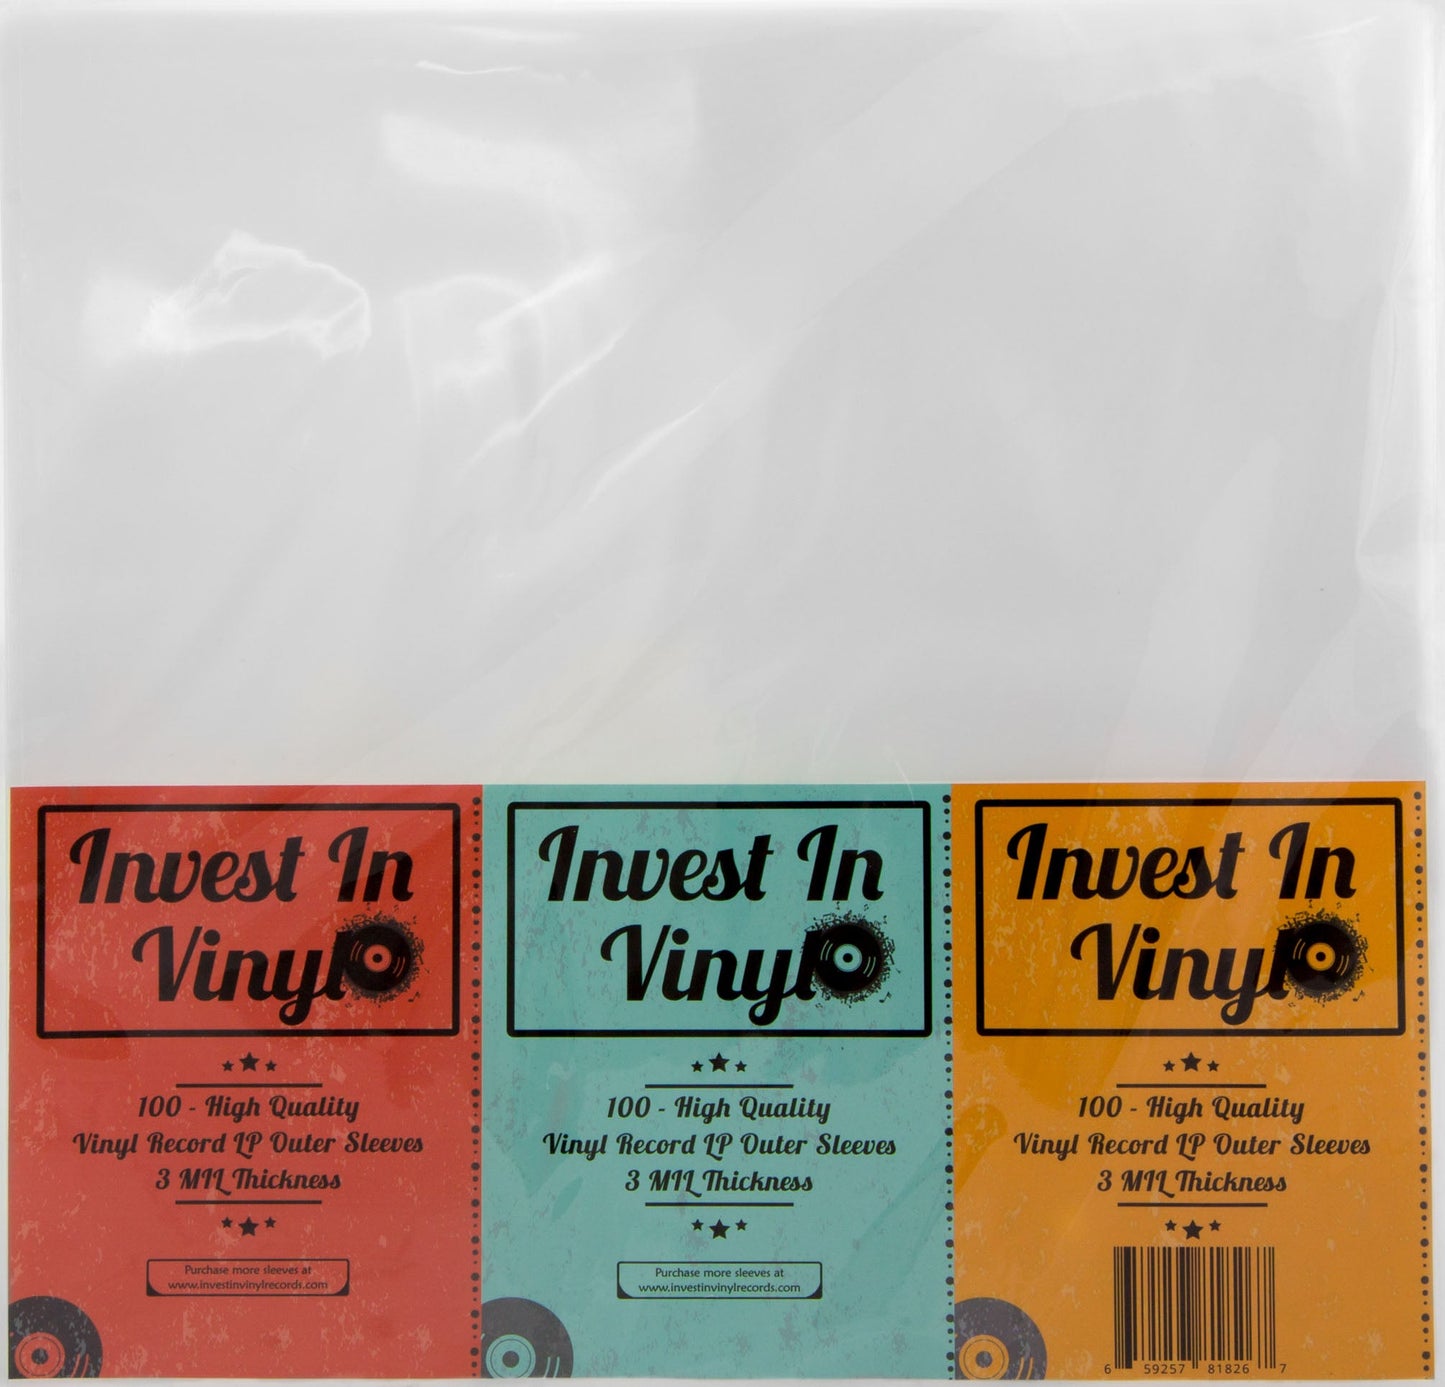 Invest In Vinyl - Fundas externas protectoras para vinilos